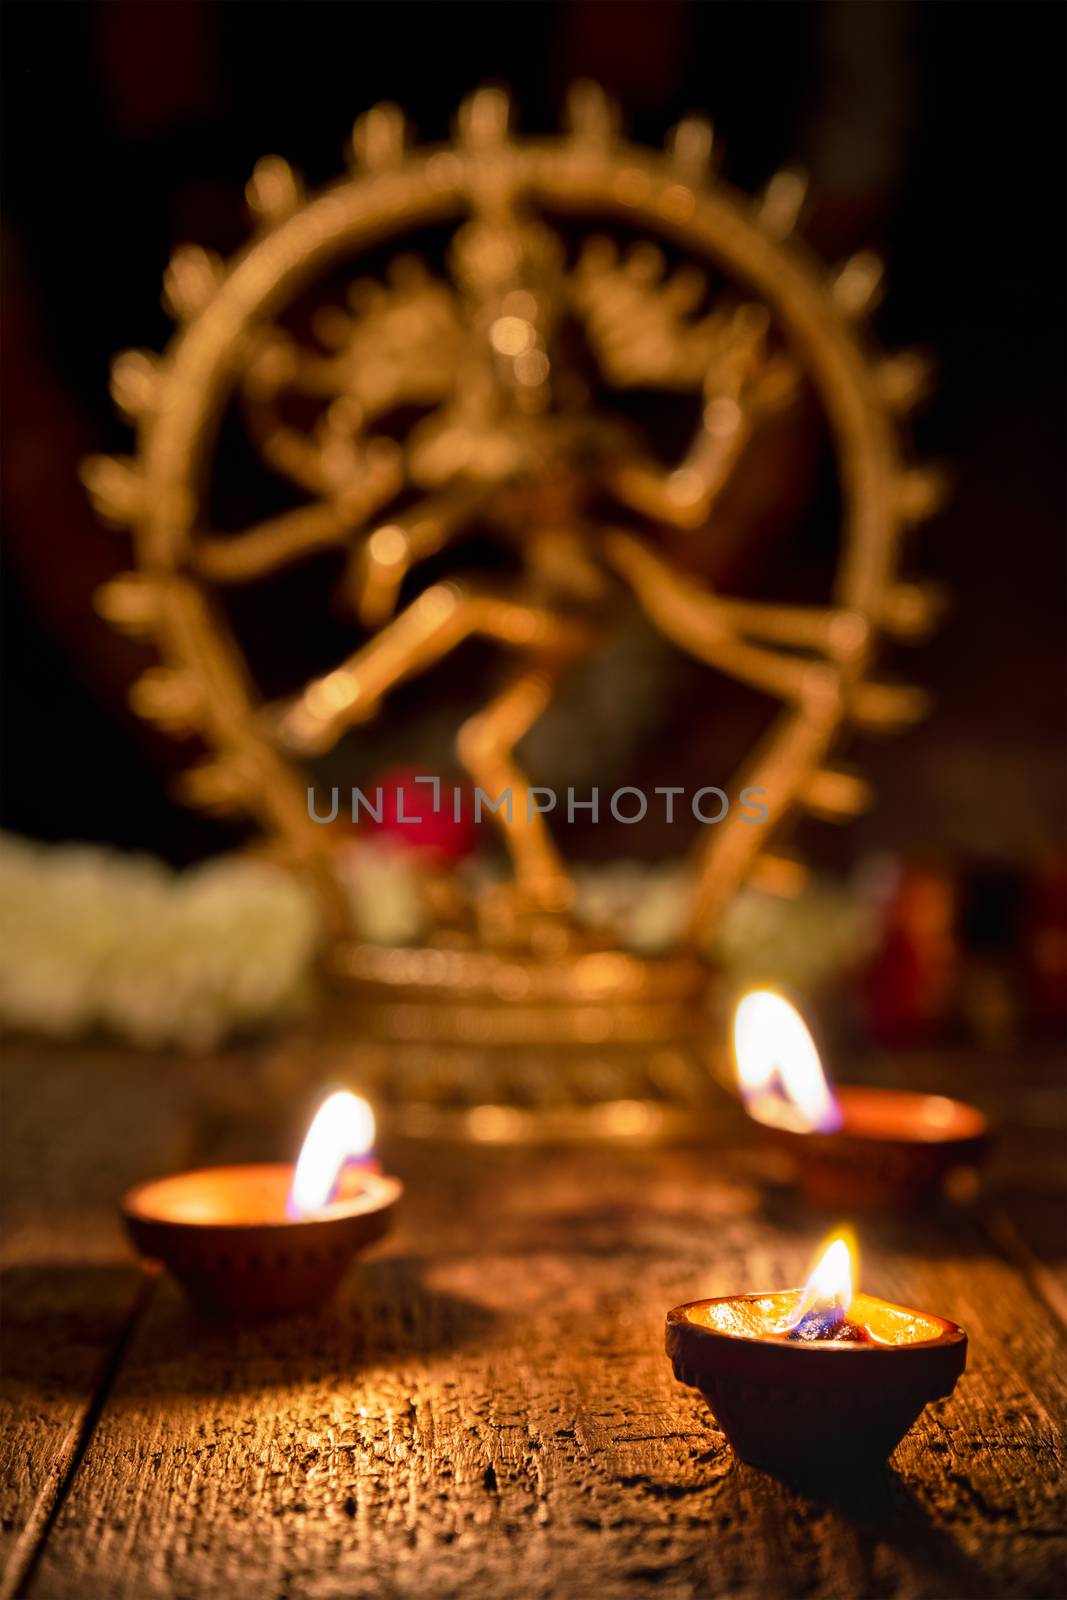 Maha Shivaratri or Diwali concept - Shiva Nataraja statuette with Diwali lights oil ghee candles, focus on lights, India